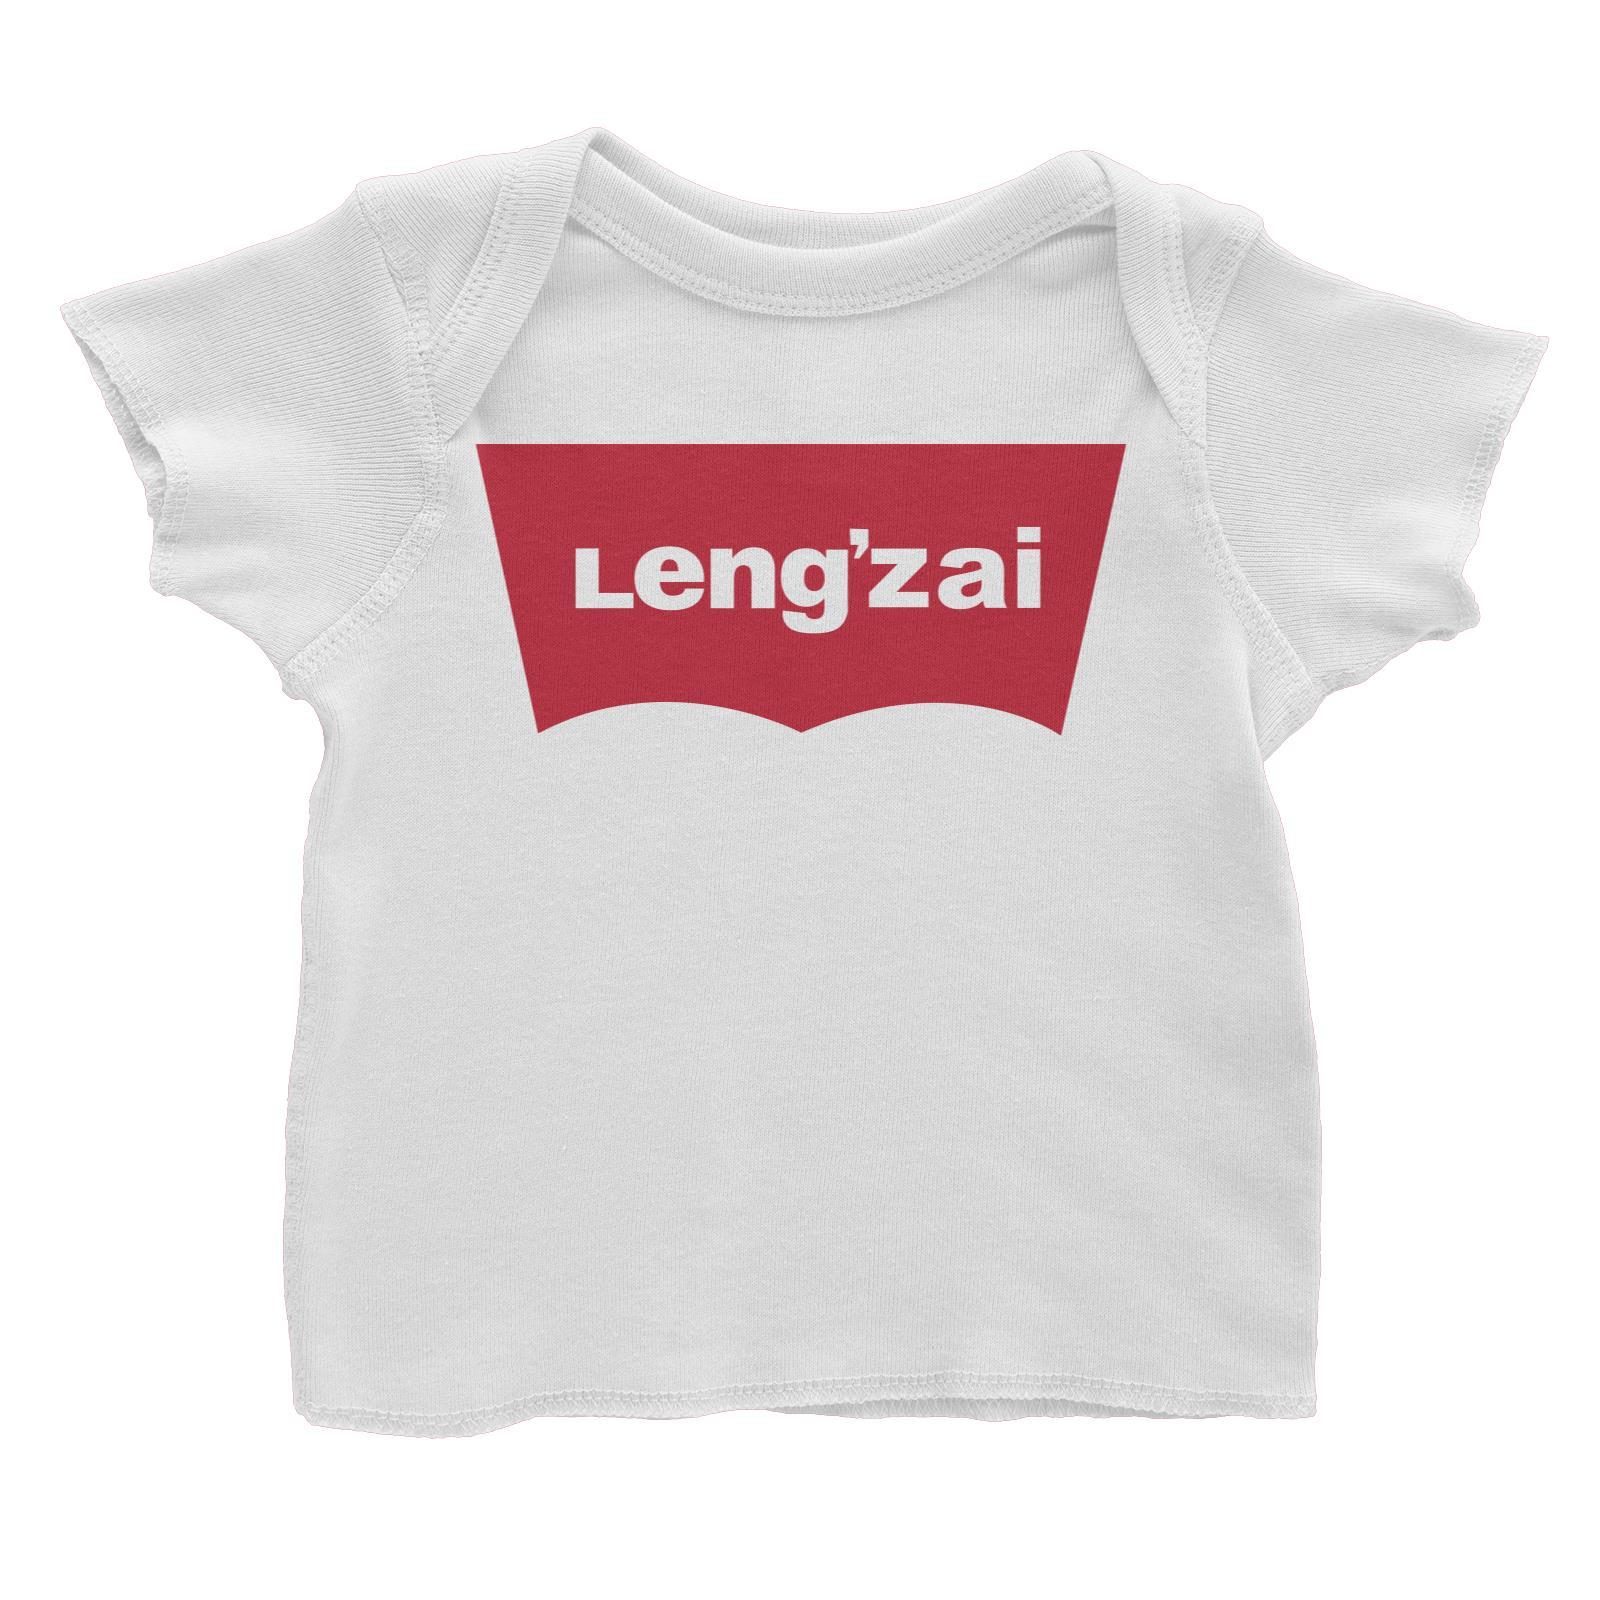 Slang Statement Lengzai Baby T-Shirt